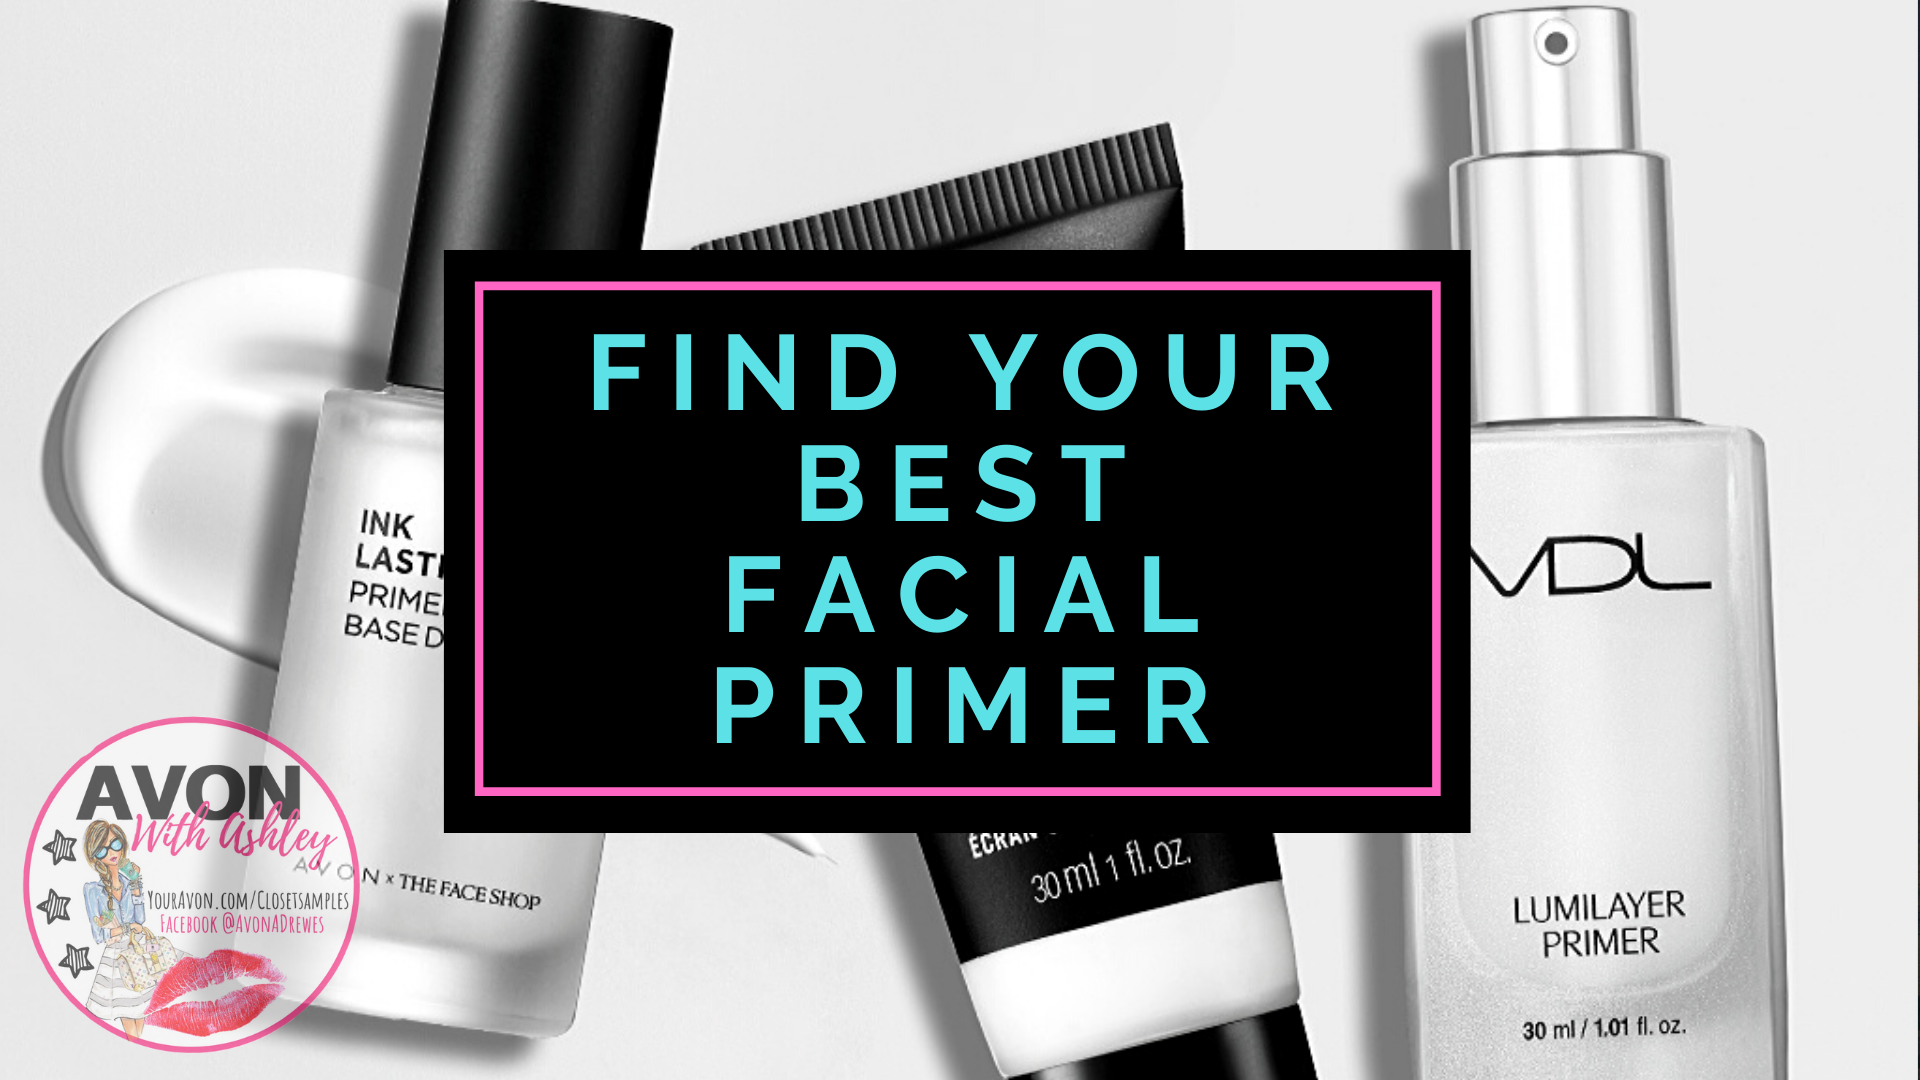 Find-Your-Best-Facial-Primer-Avon-Closetsamples.png